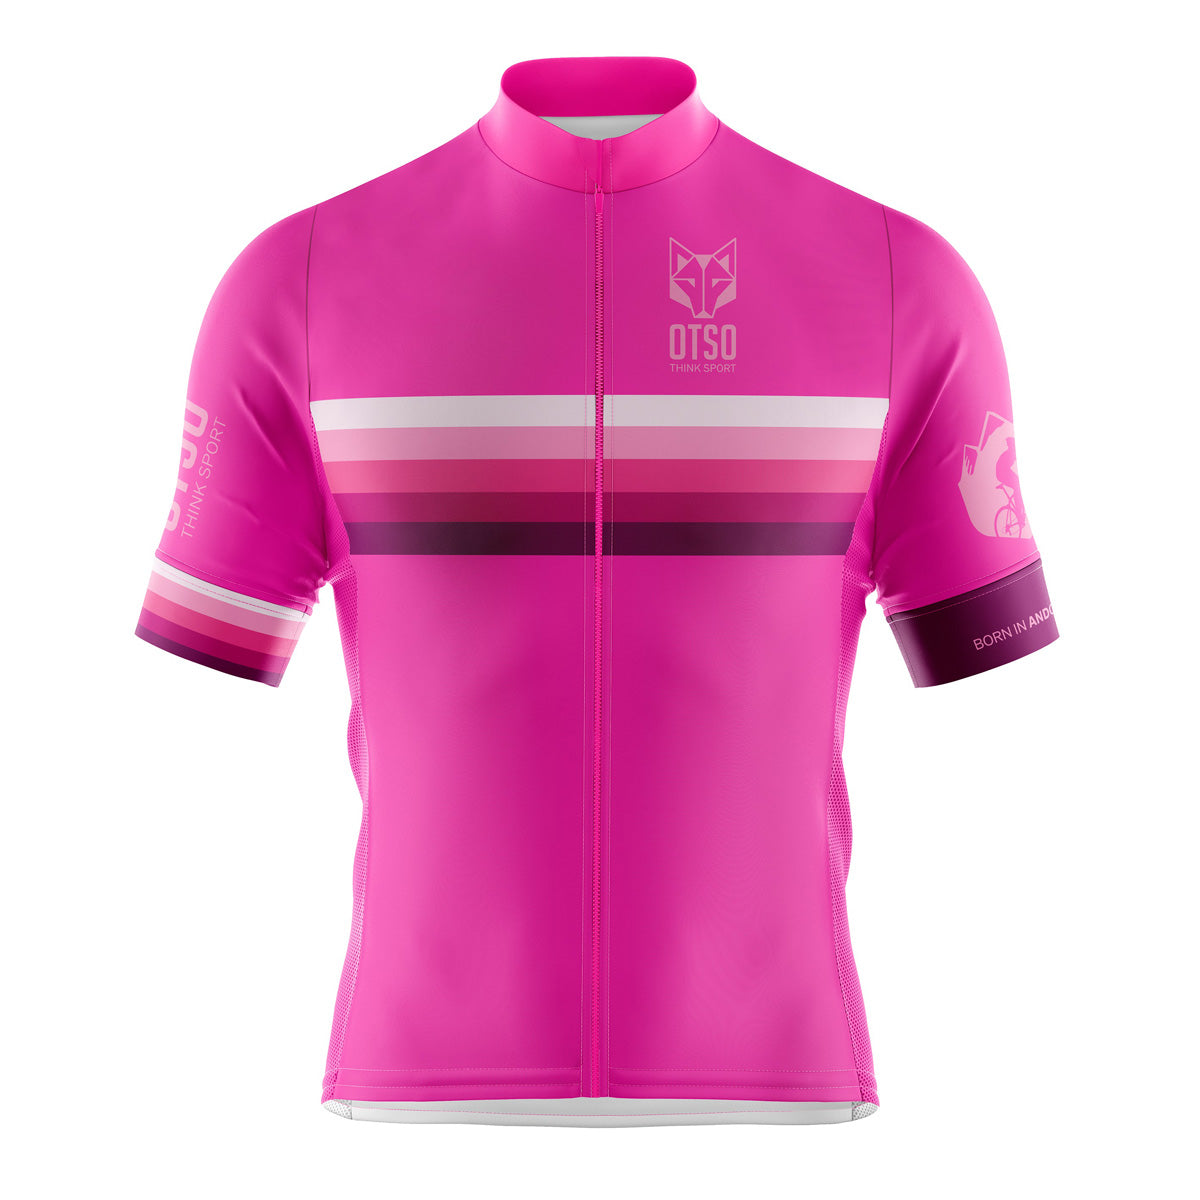 Maillot de cyclisme manches courtes homme - Stripes Fluo Pink (Outlet)